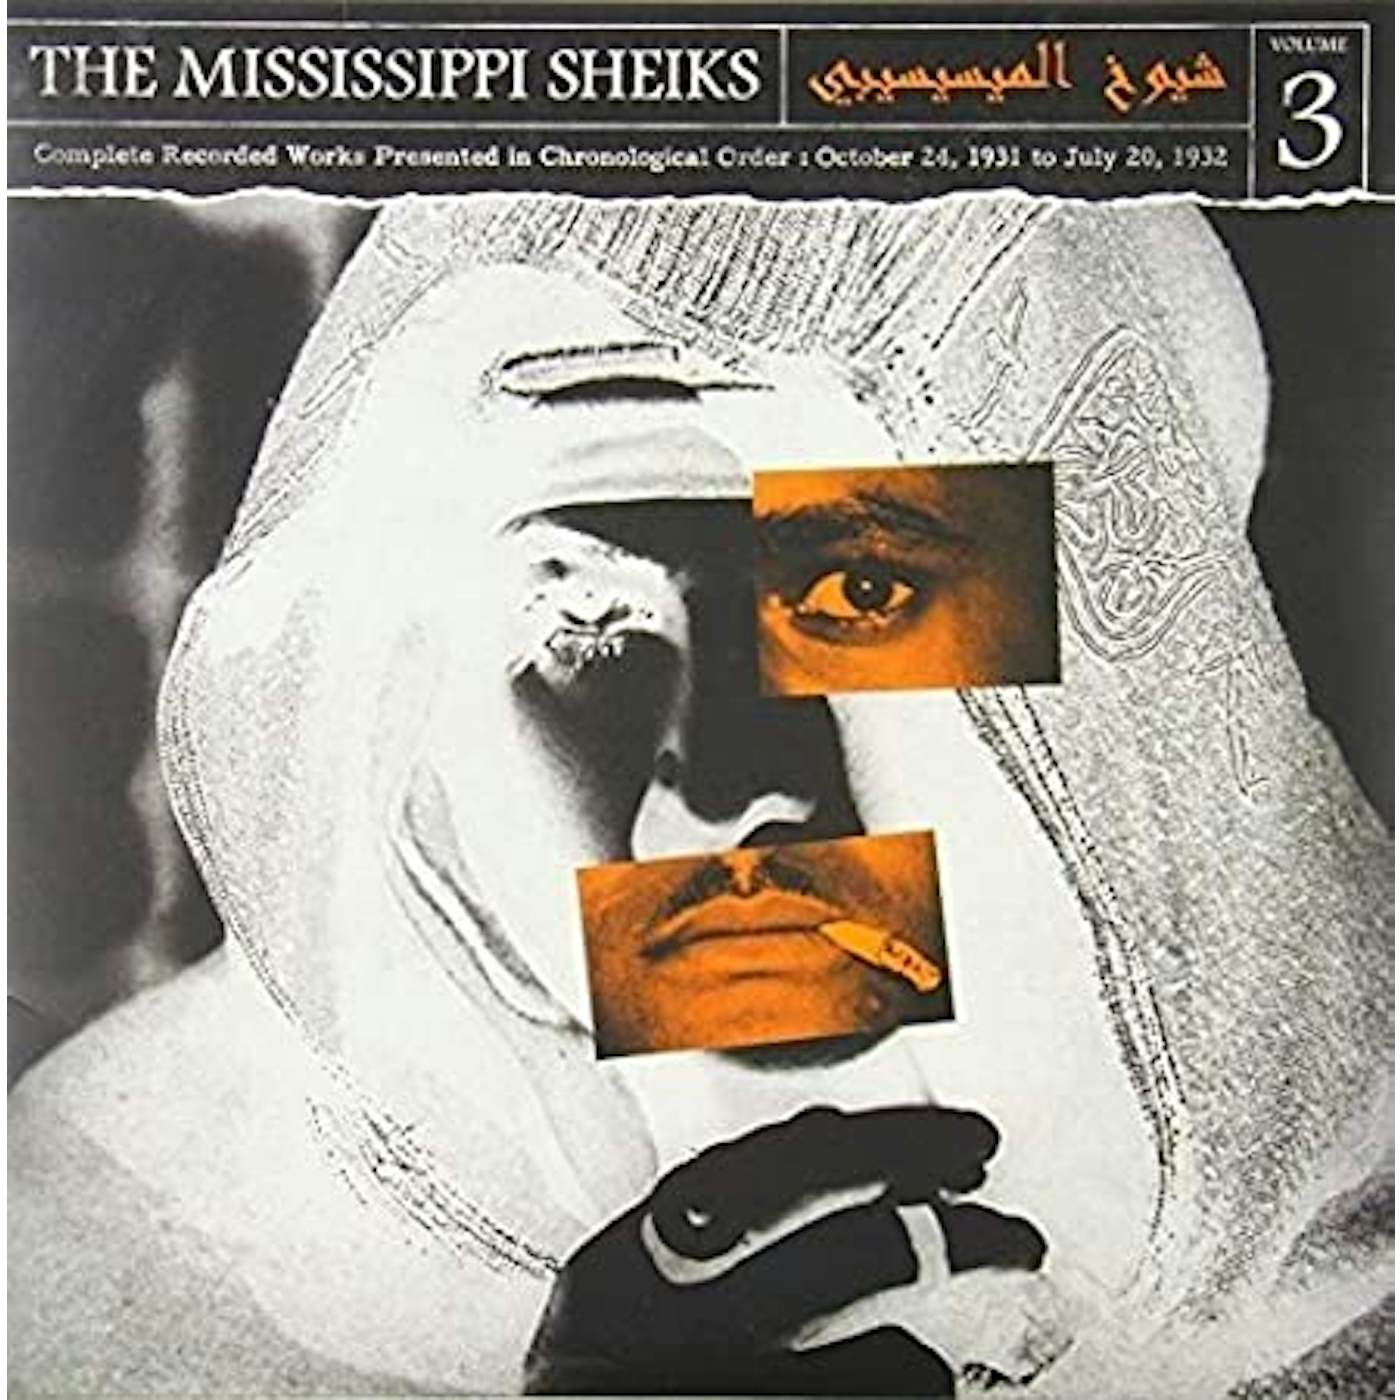 Mississippi Sheiks COMPLETED WORKS IN CHRONOLOGICAL ORDER VOLUME 3 (180G) Vinyl Record